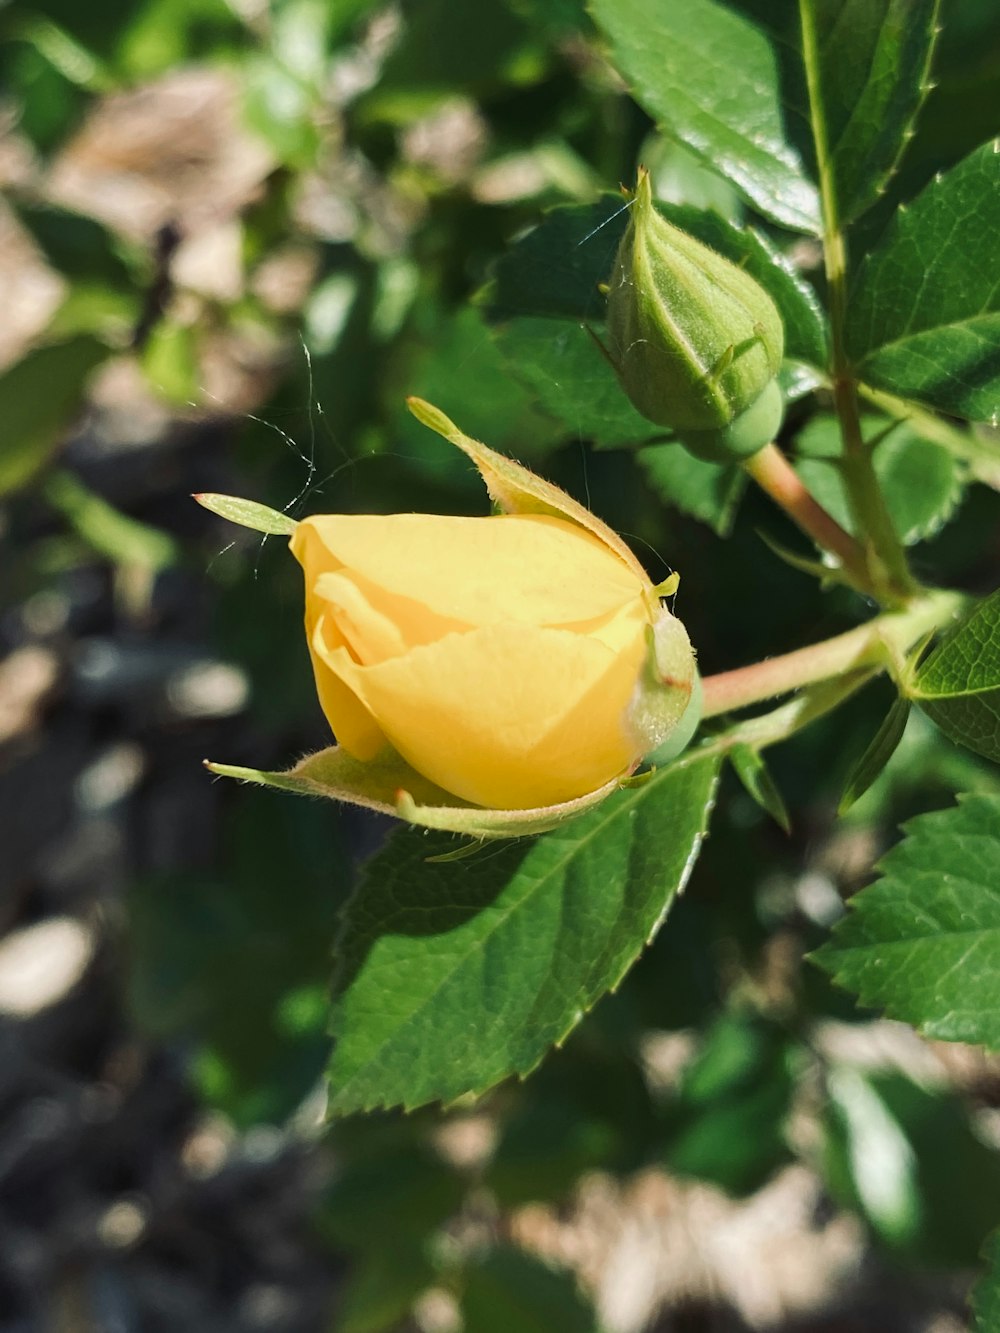 a yellow rose budding in a garden